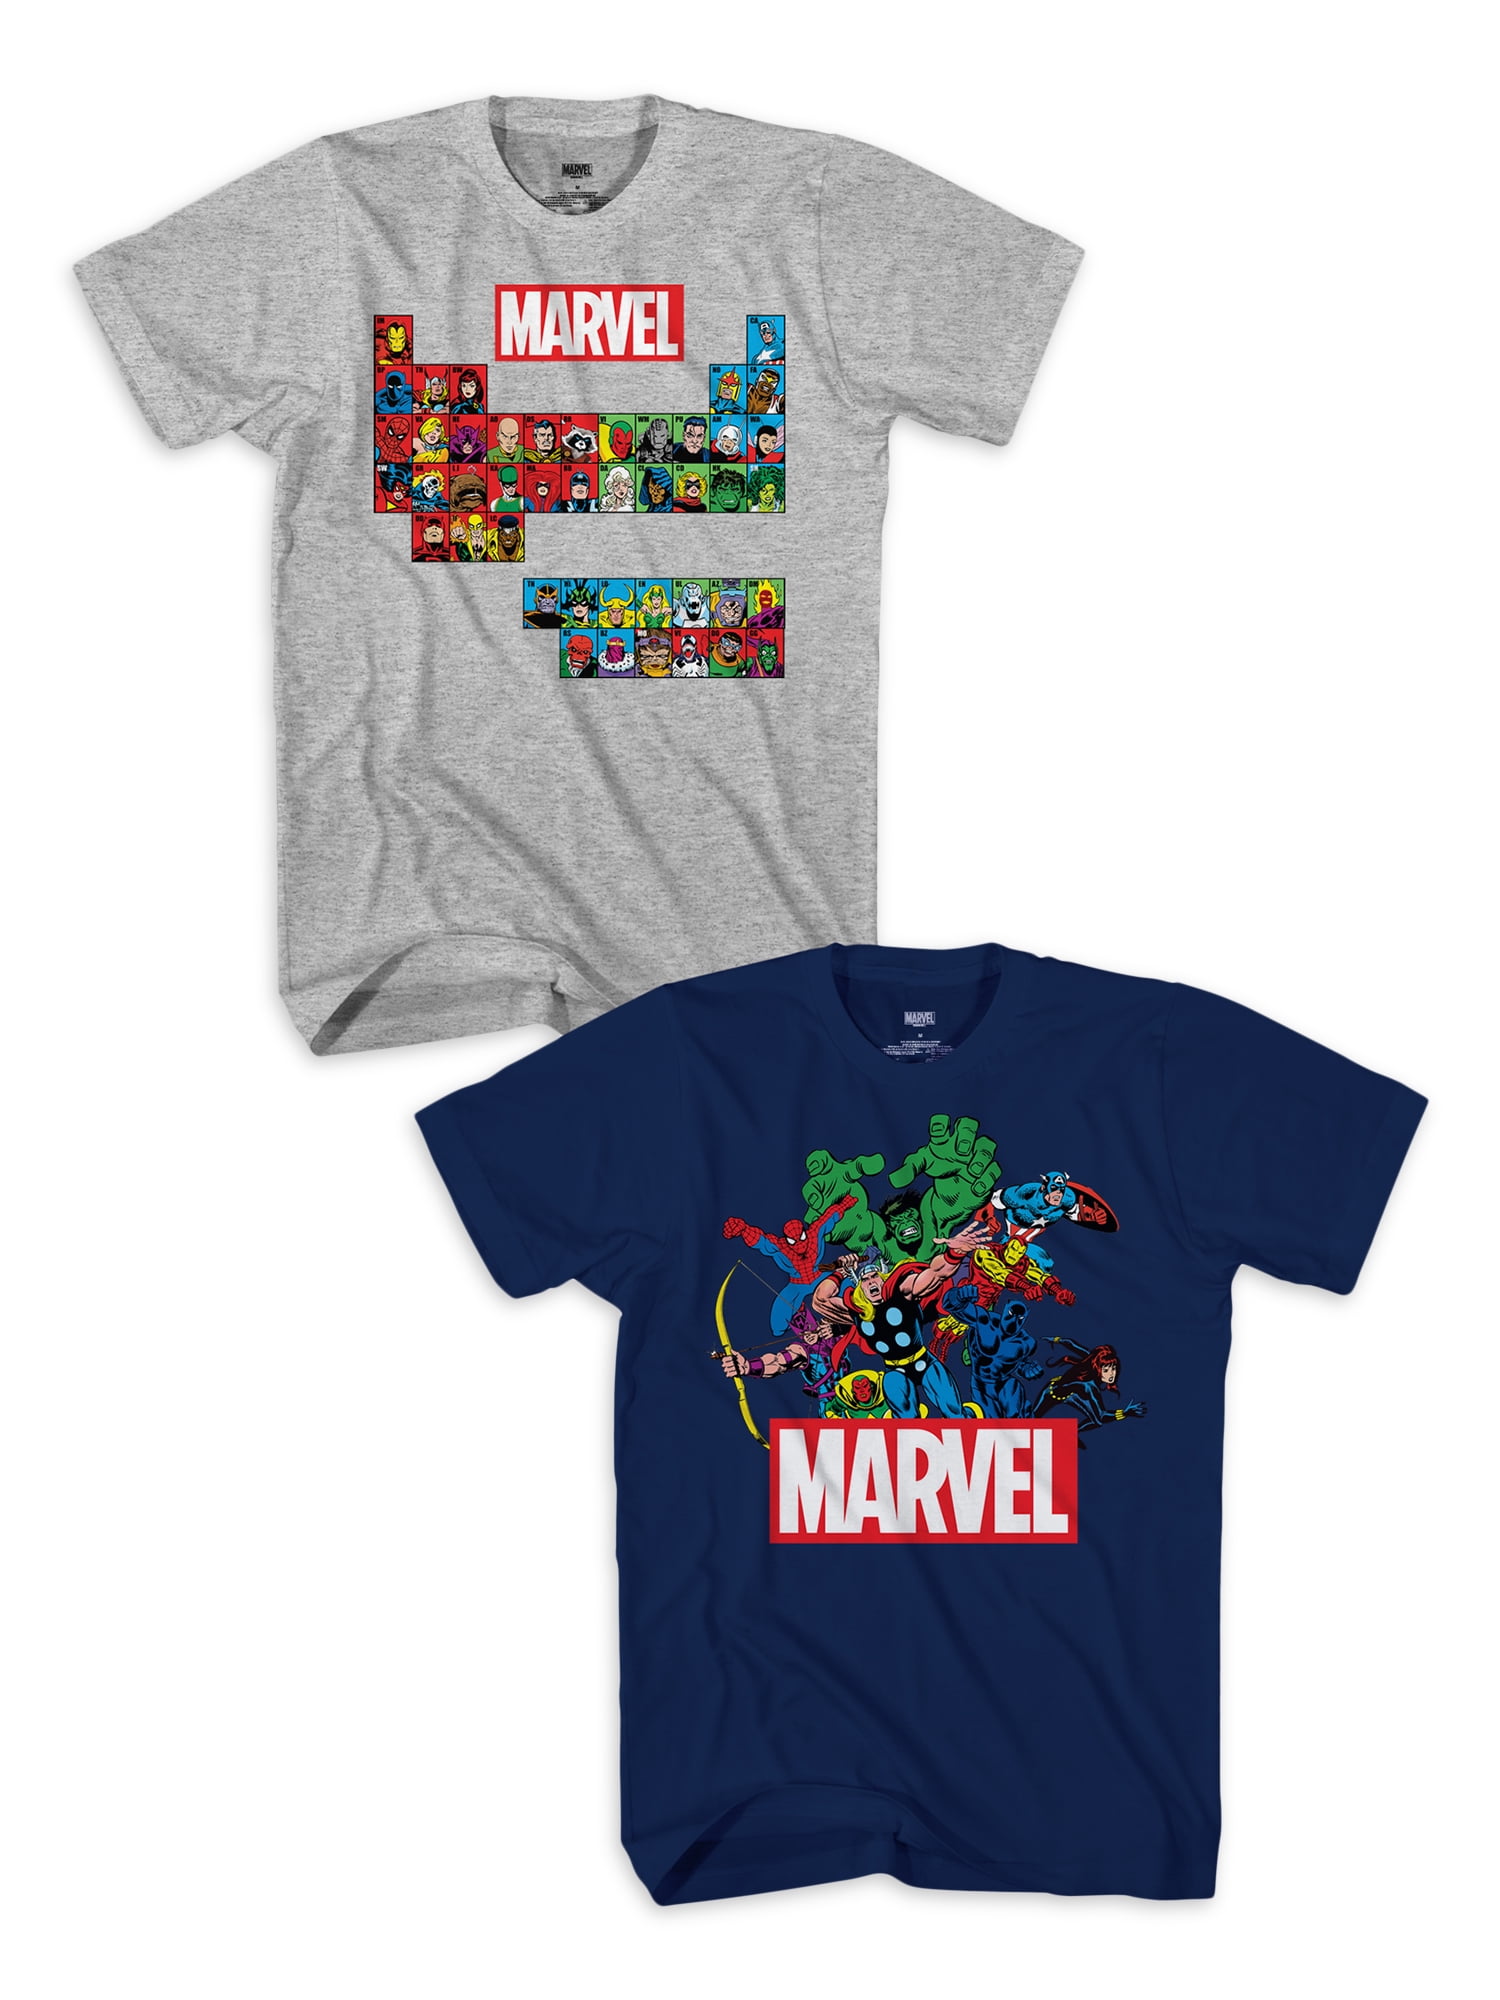 Marvel The Avengers Child Boys size 5-6 Toddler Shirt NEW Super Heroes Talking 